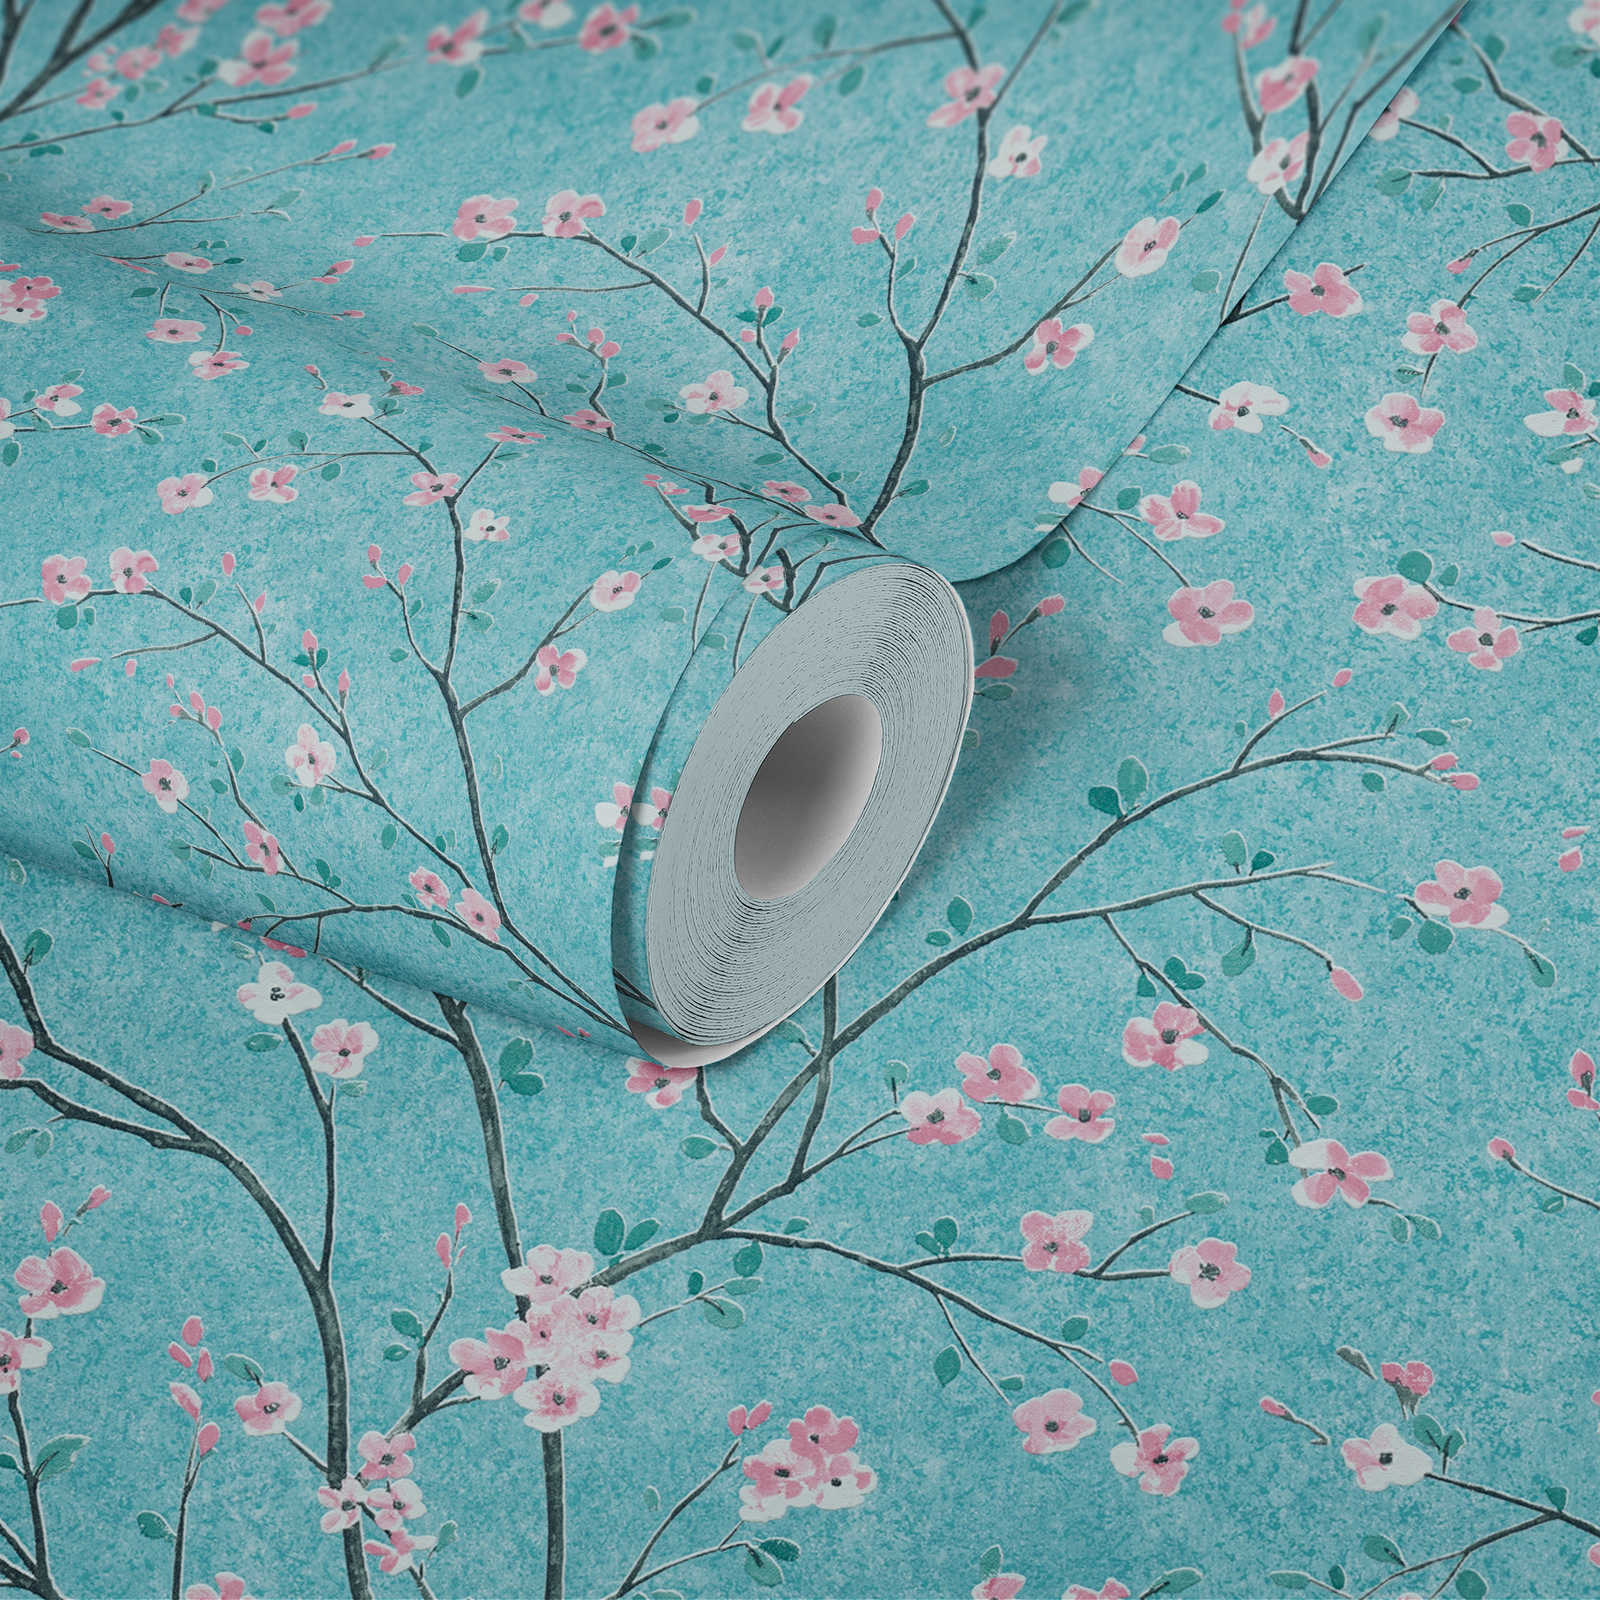             Japanische Kirschblüten Tapete – Blau, Grün, Rosa
        